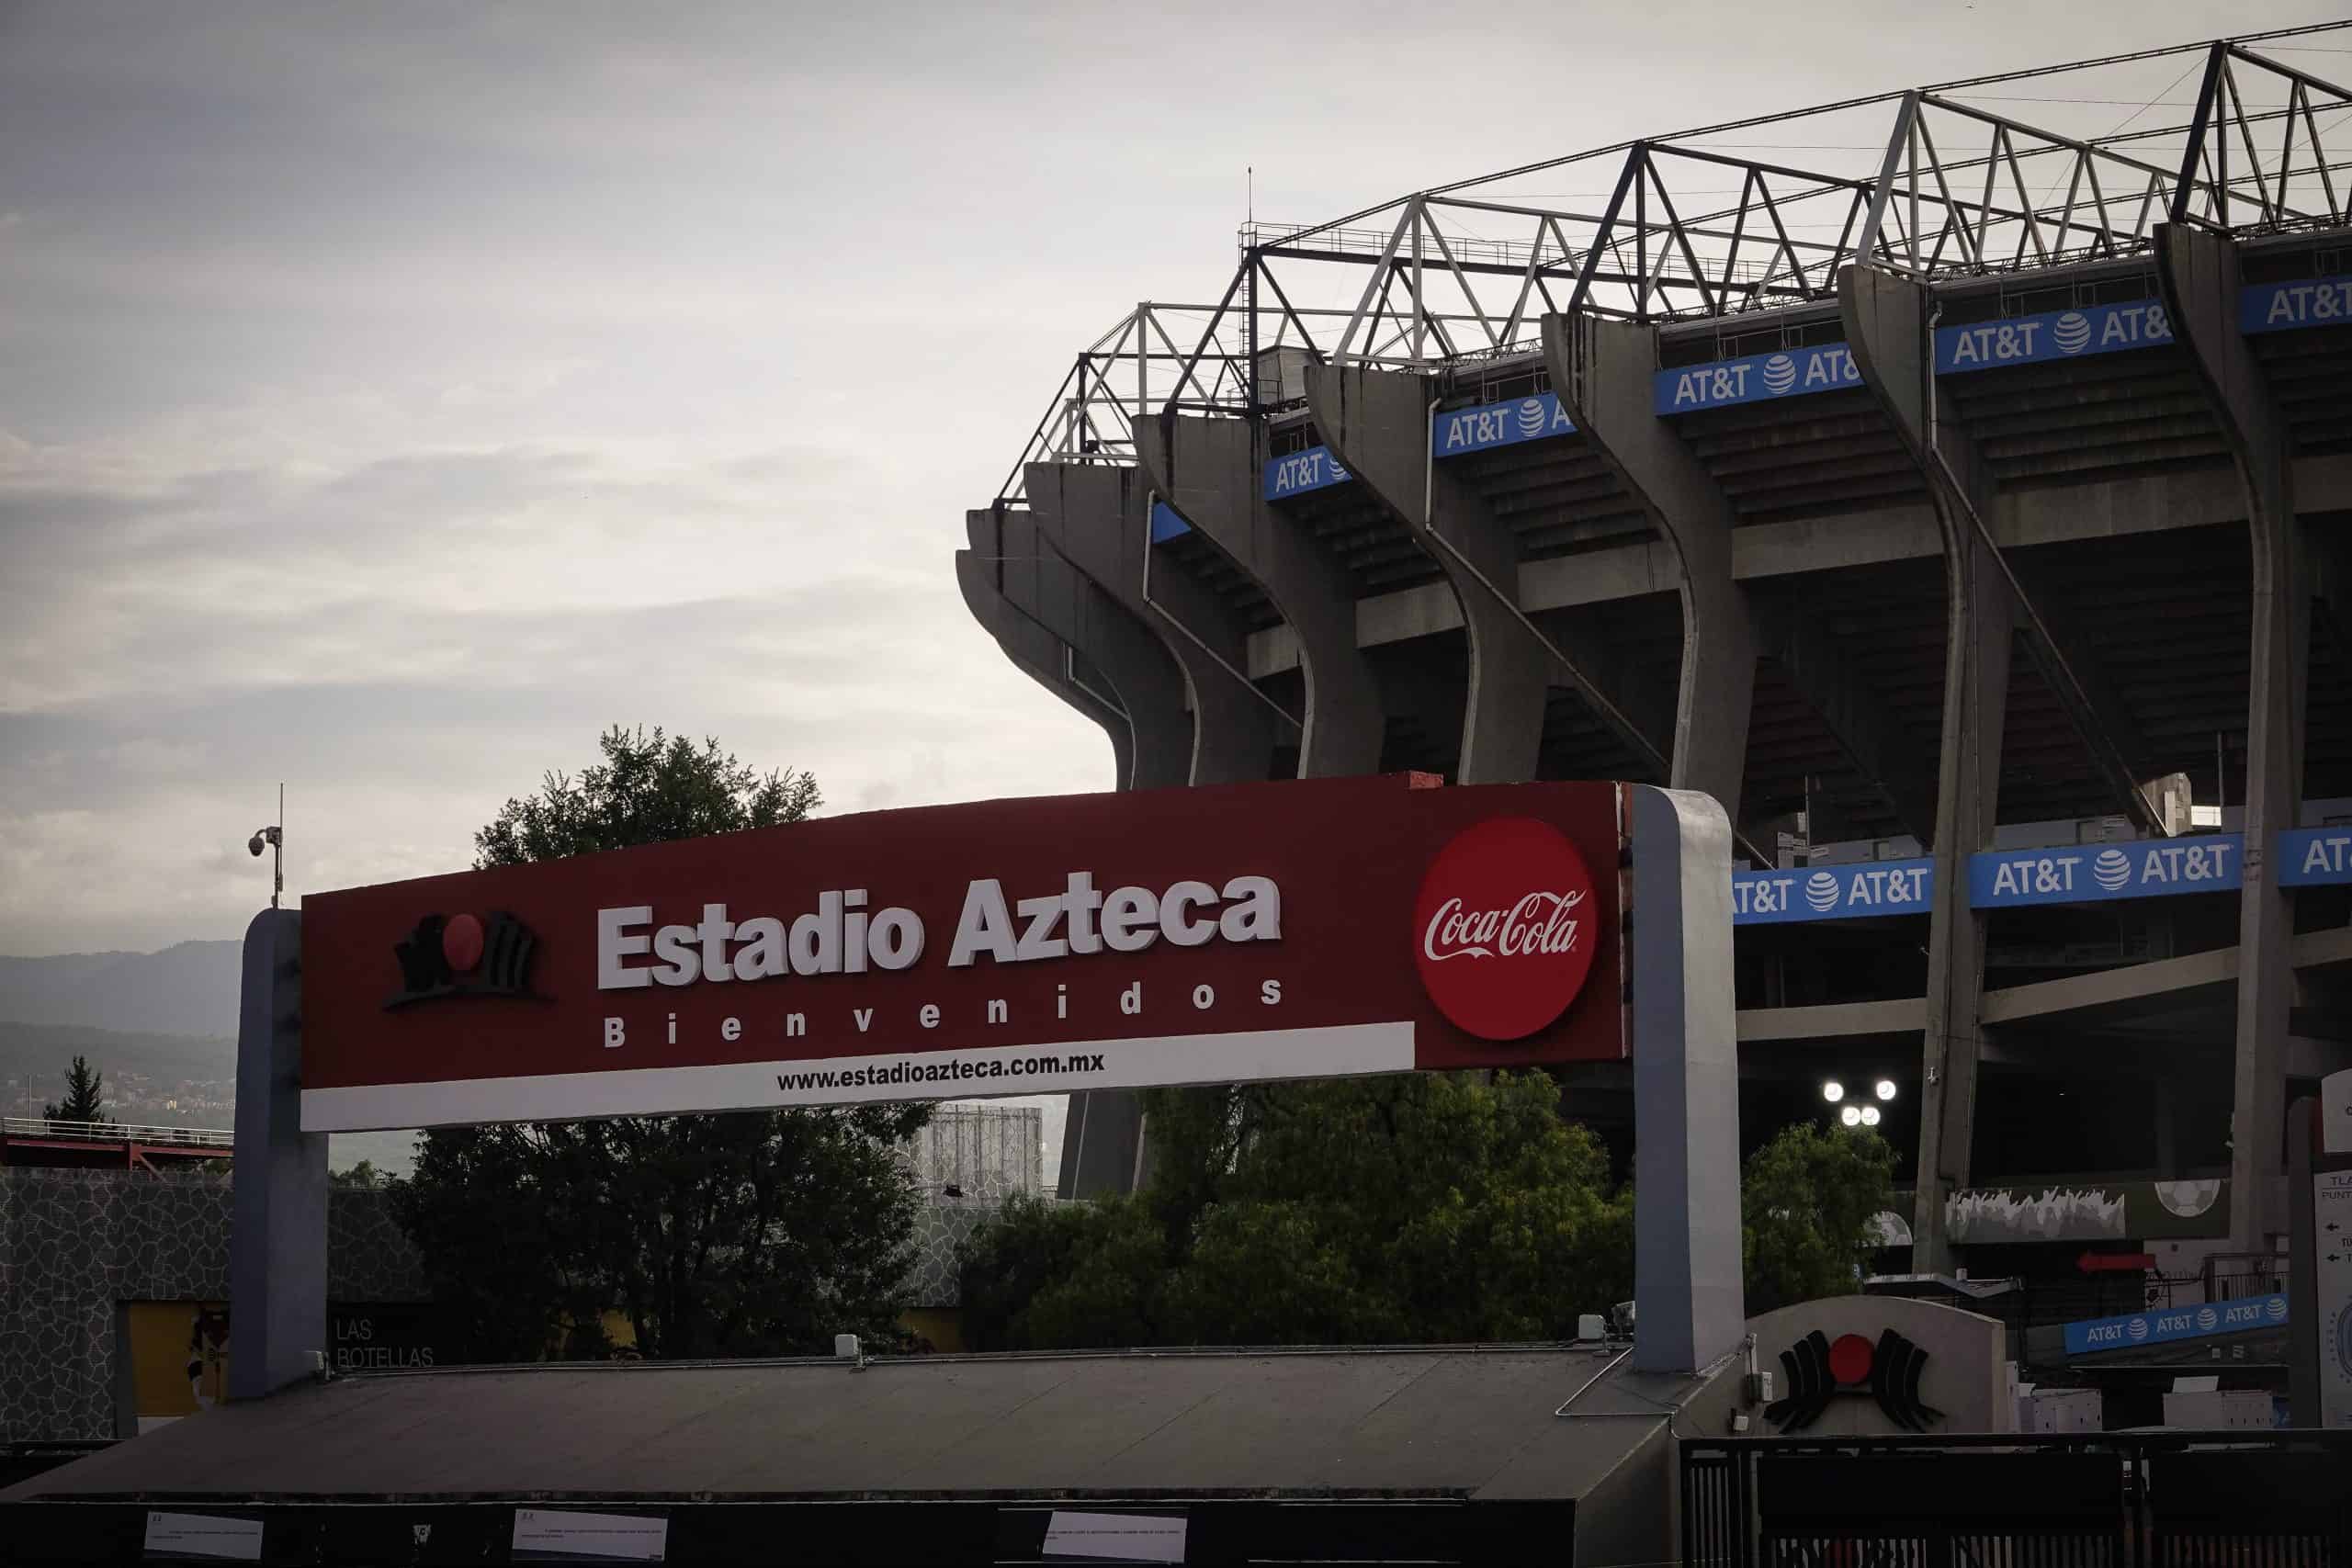 Azteca Stadium entrance